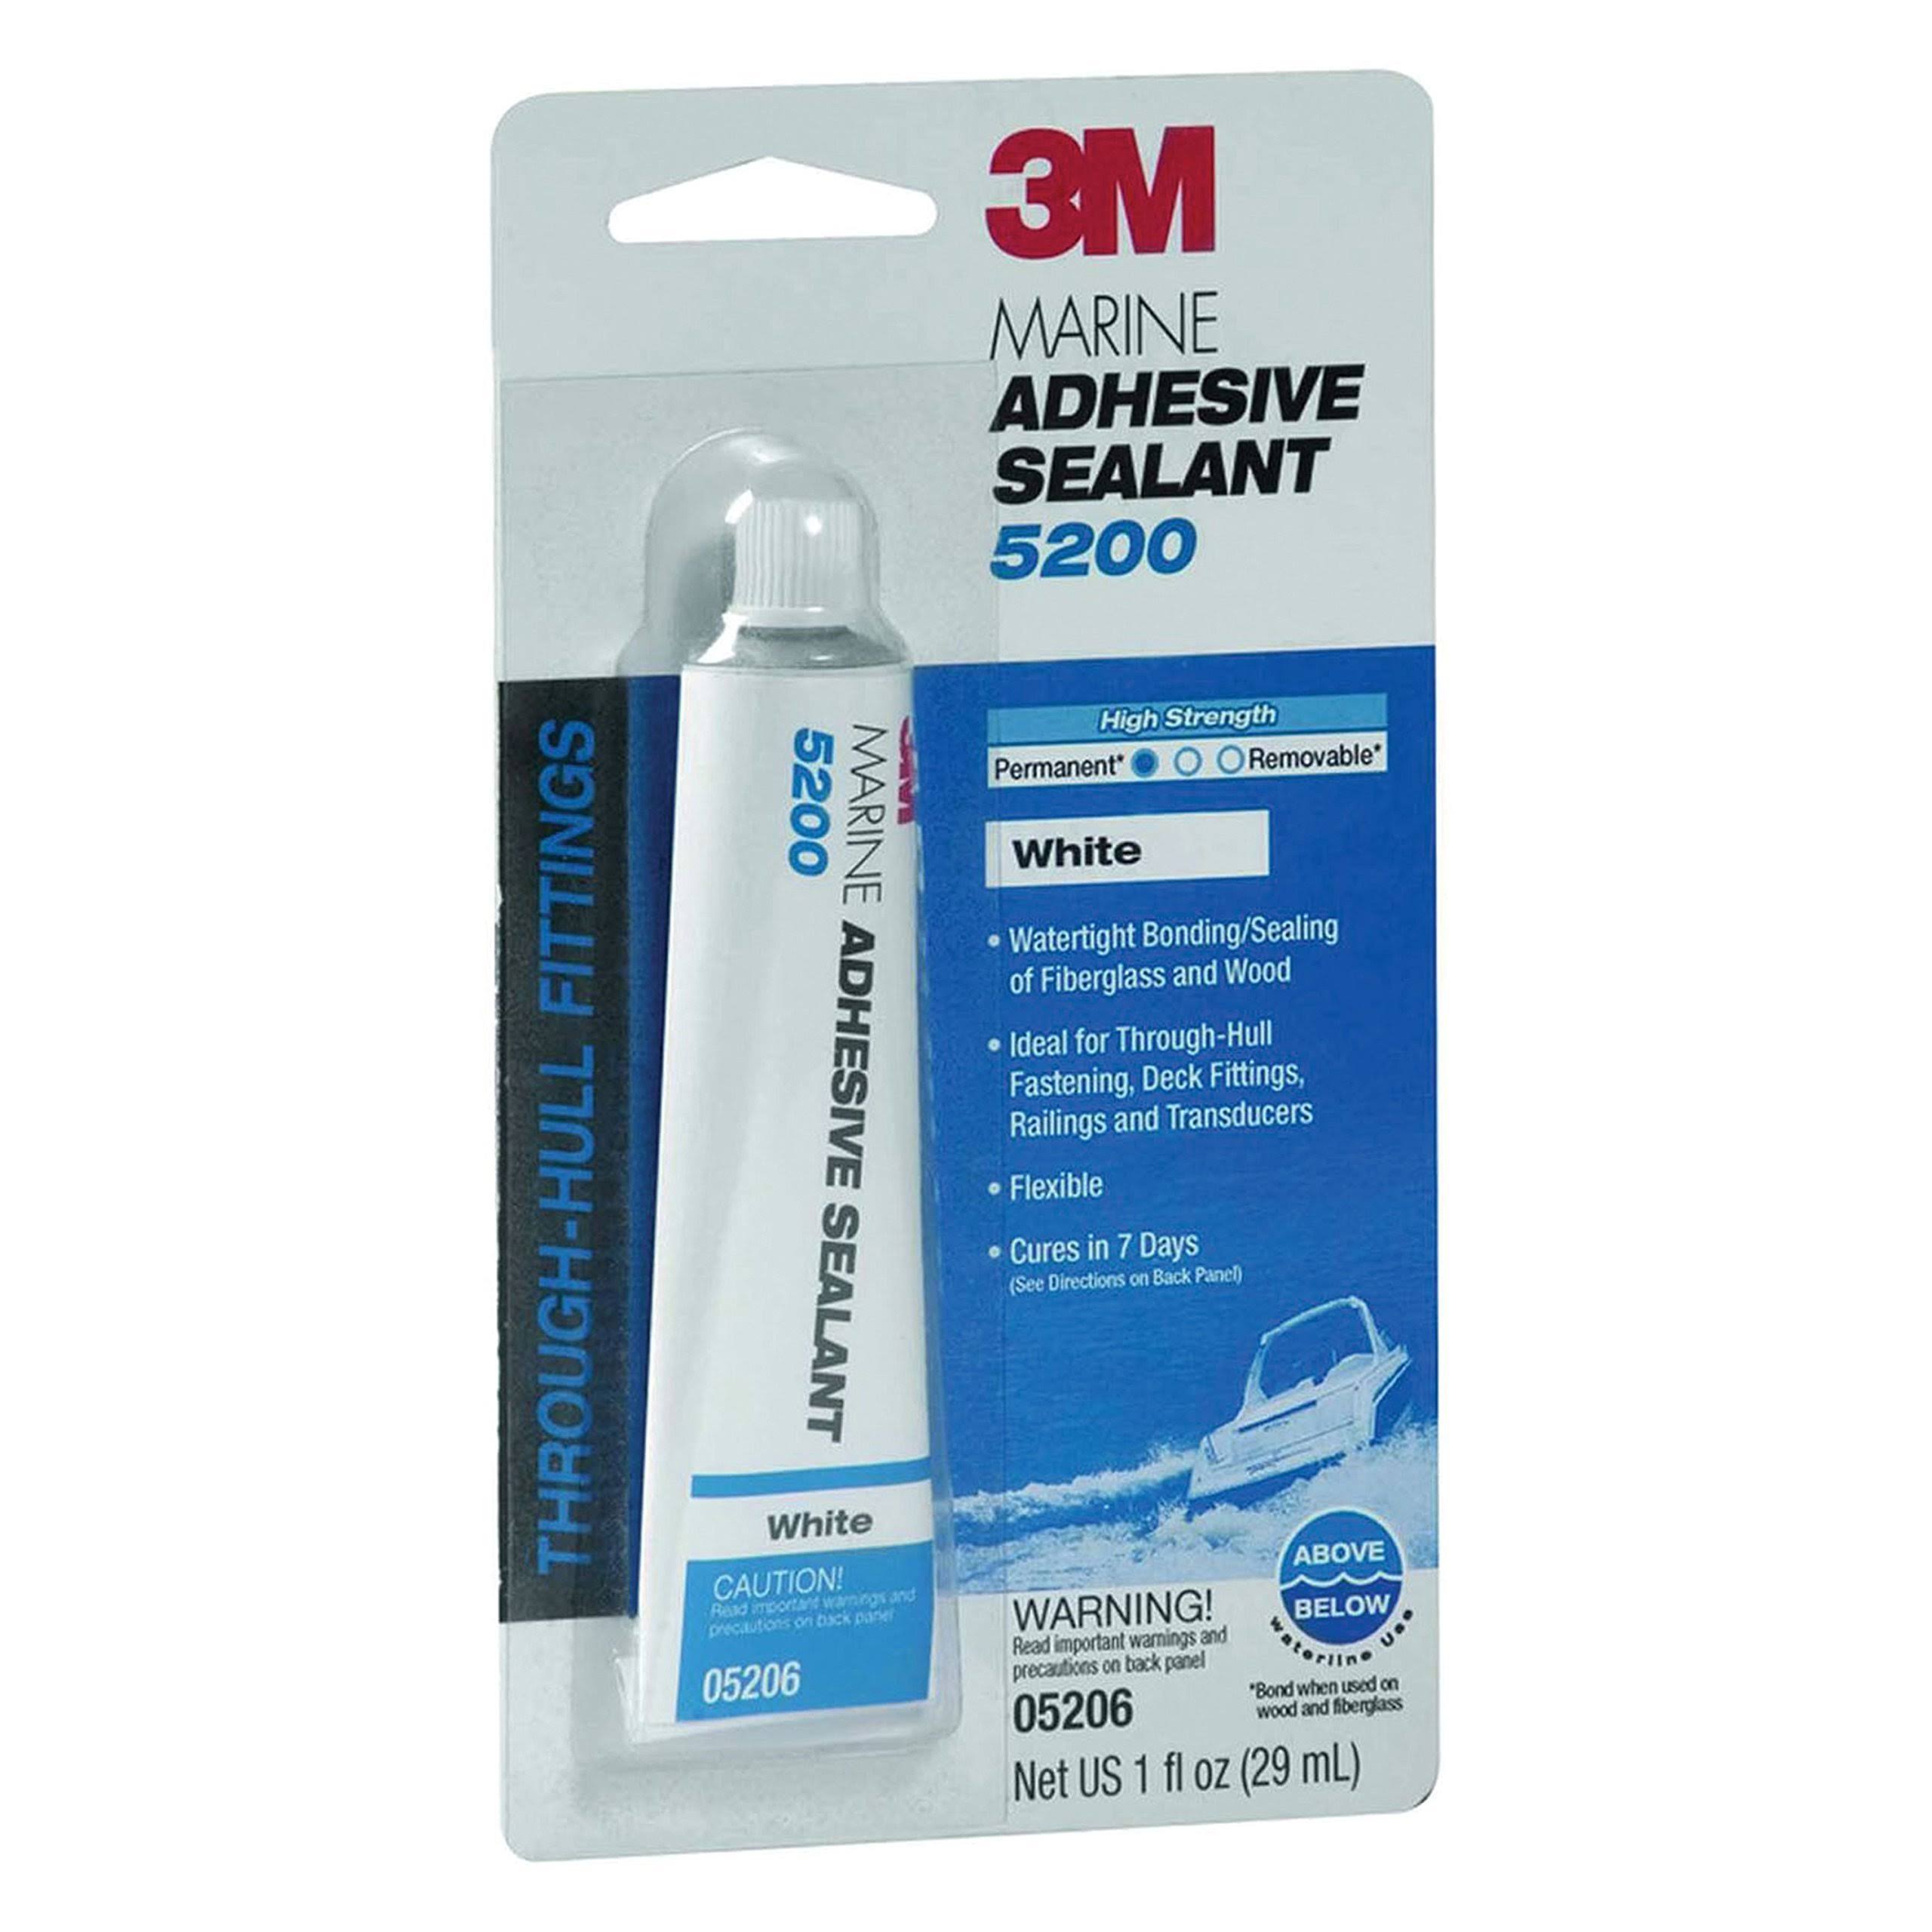 3M Marine Adhesive Sealant - White, 1oz